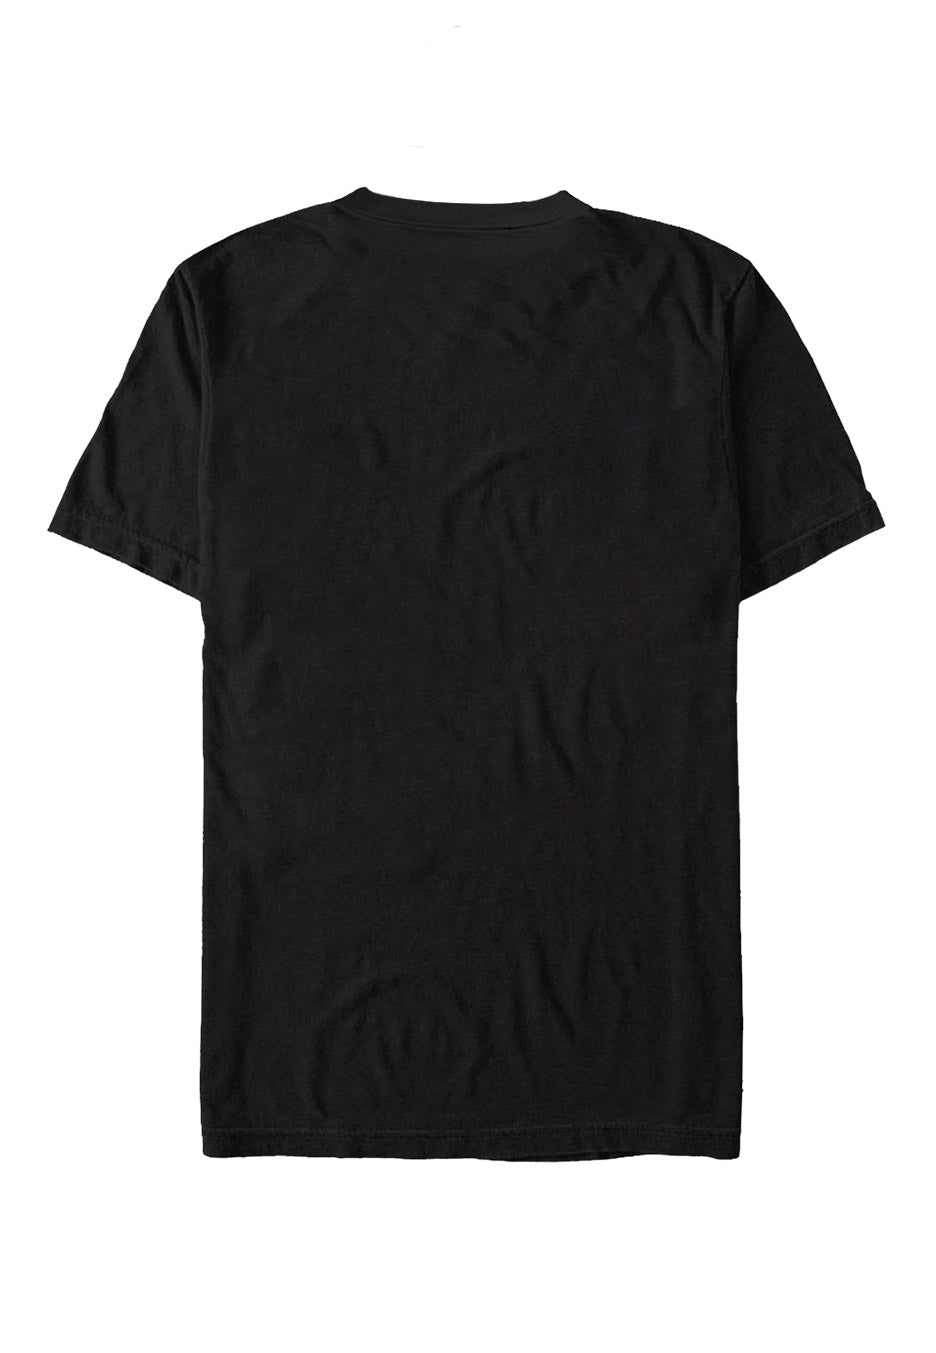 Avantasia - Skull Roses - T-Shirt